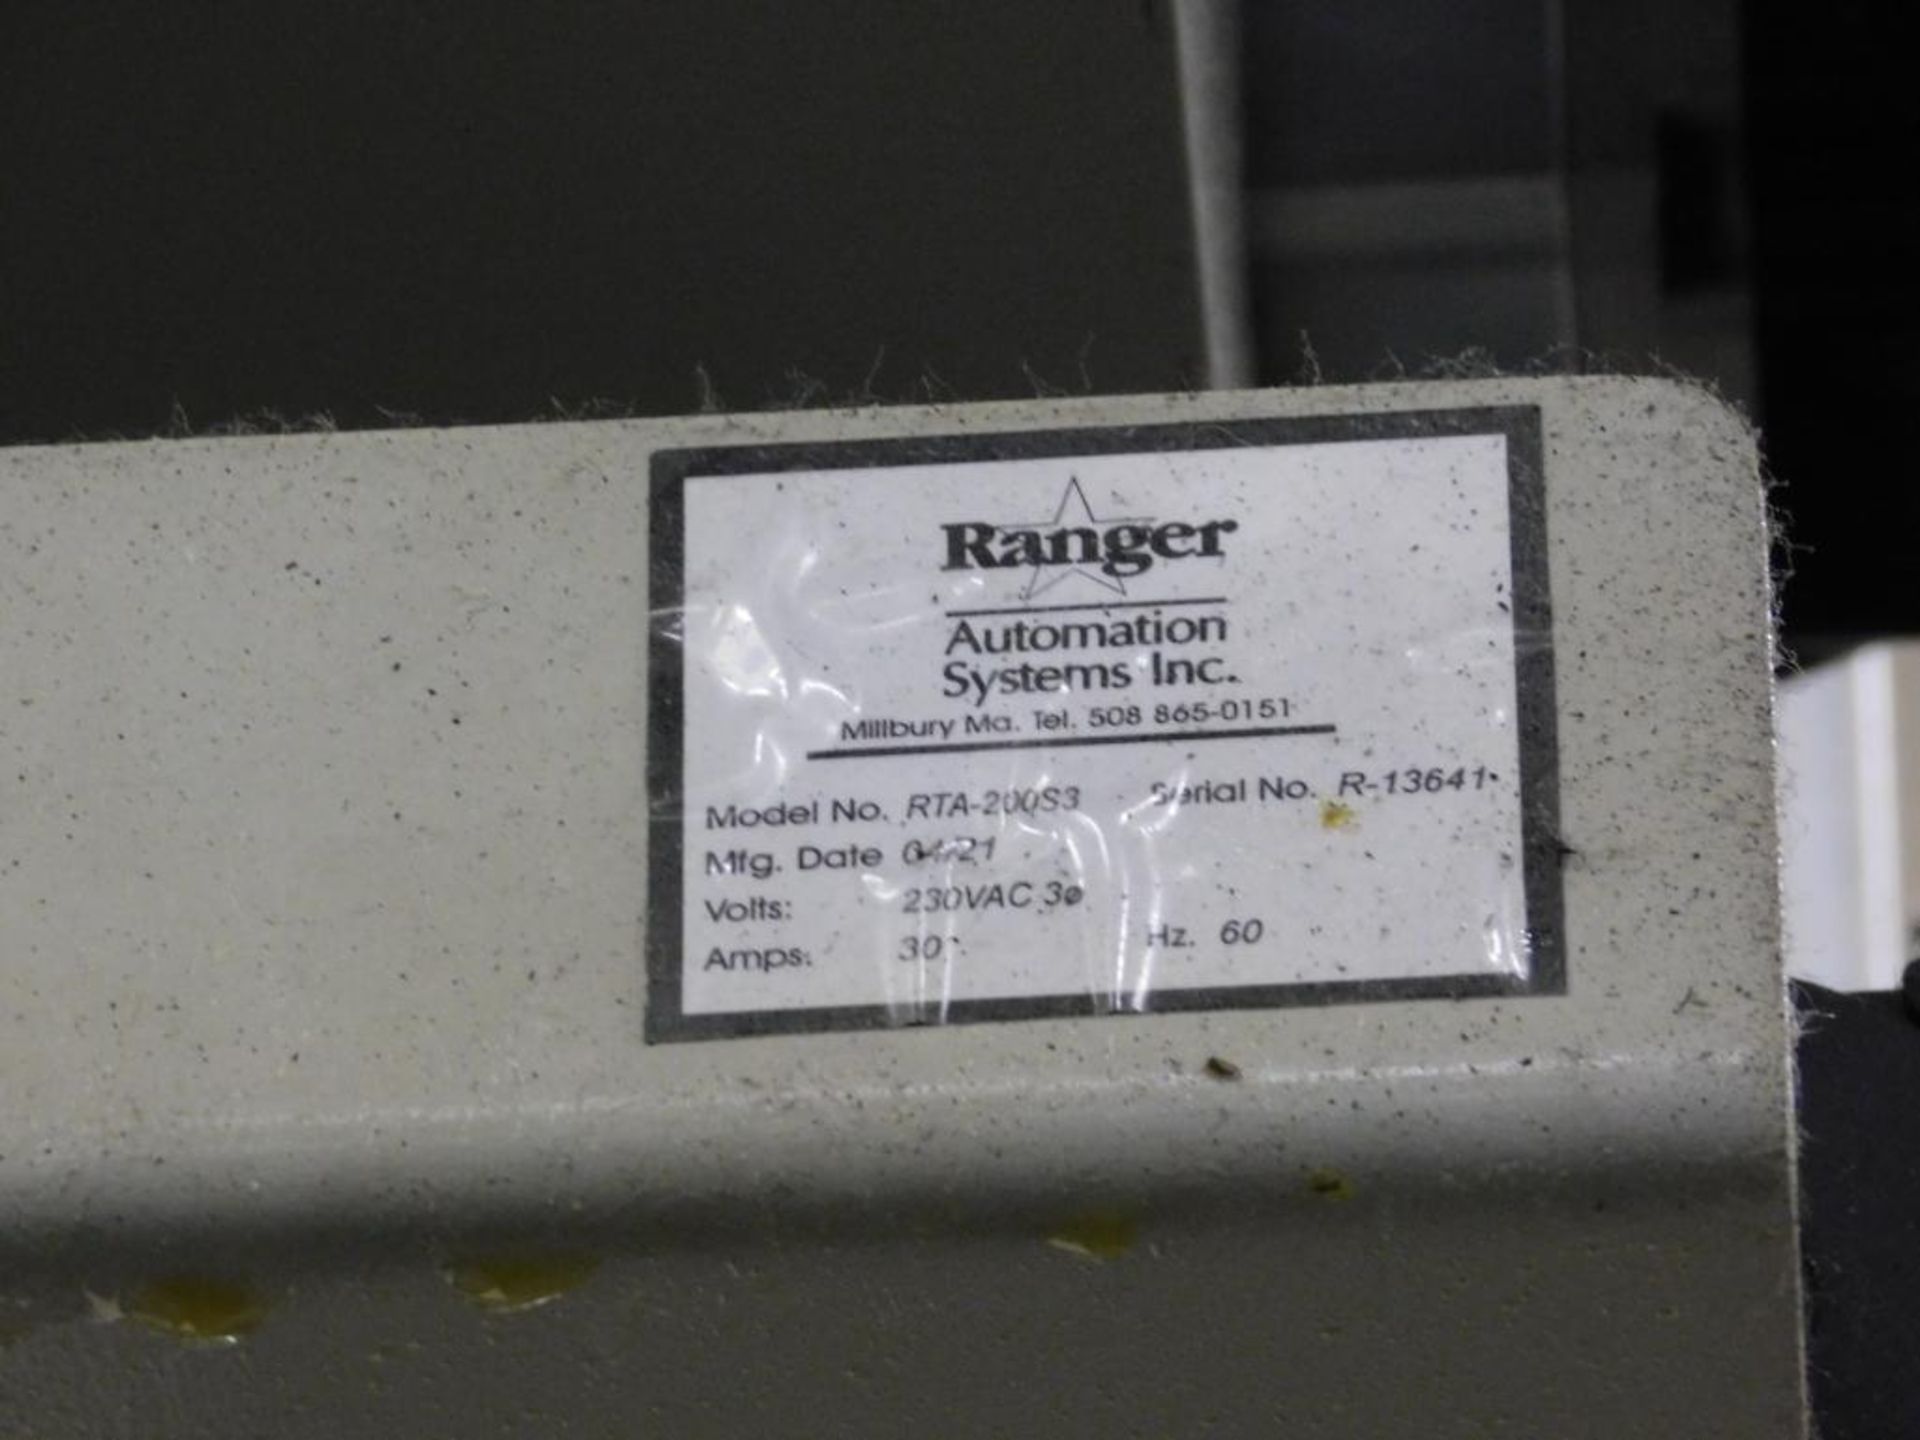 Ranger RTA-200S3 Pick/Place Robot, S/N R-13641 (2021) (Asset 67) - Image 4 of 4